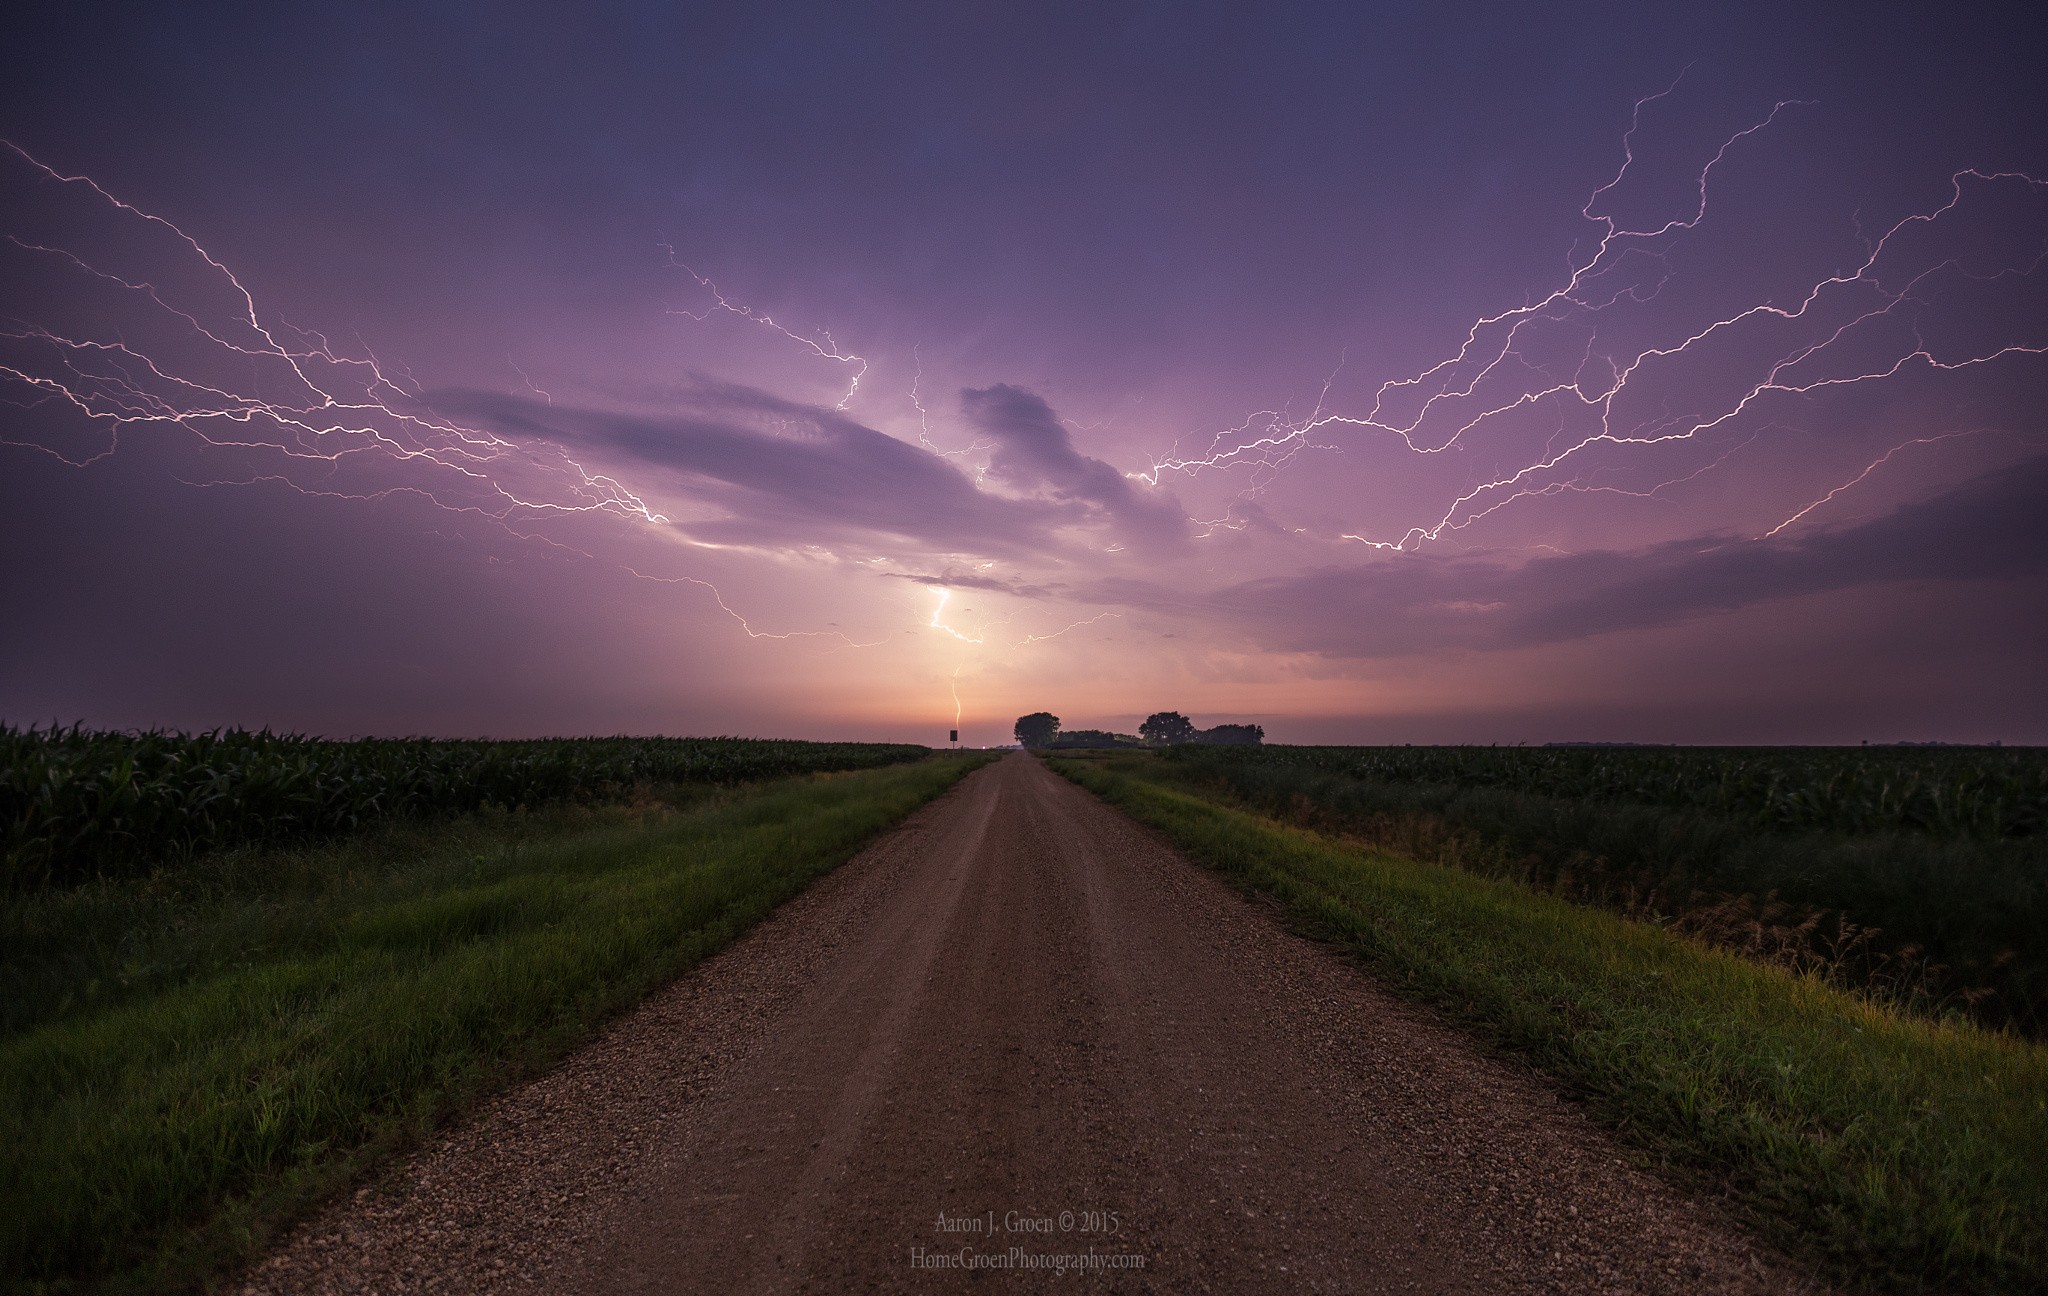 General 2048x1296 lightning sky dirt road 2015 (Year) field storm watermarked low light